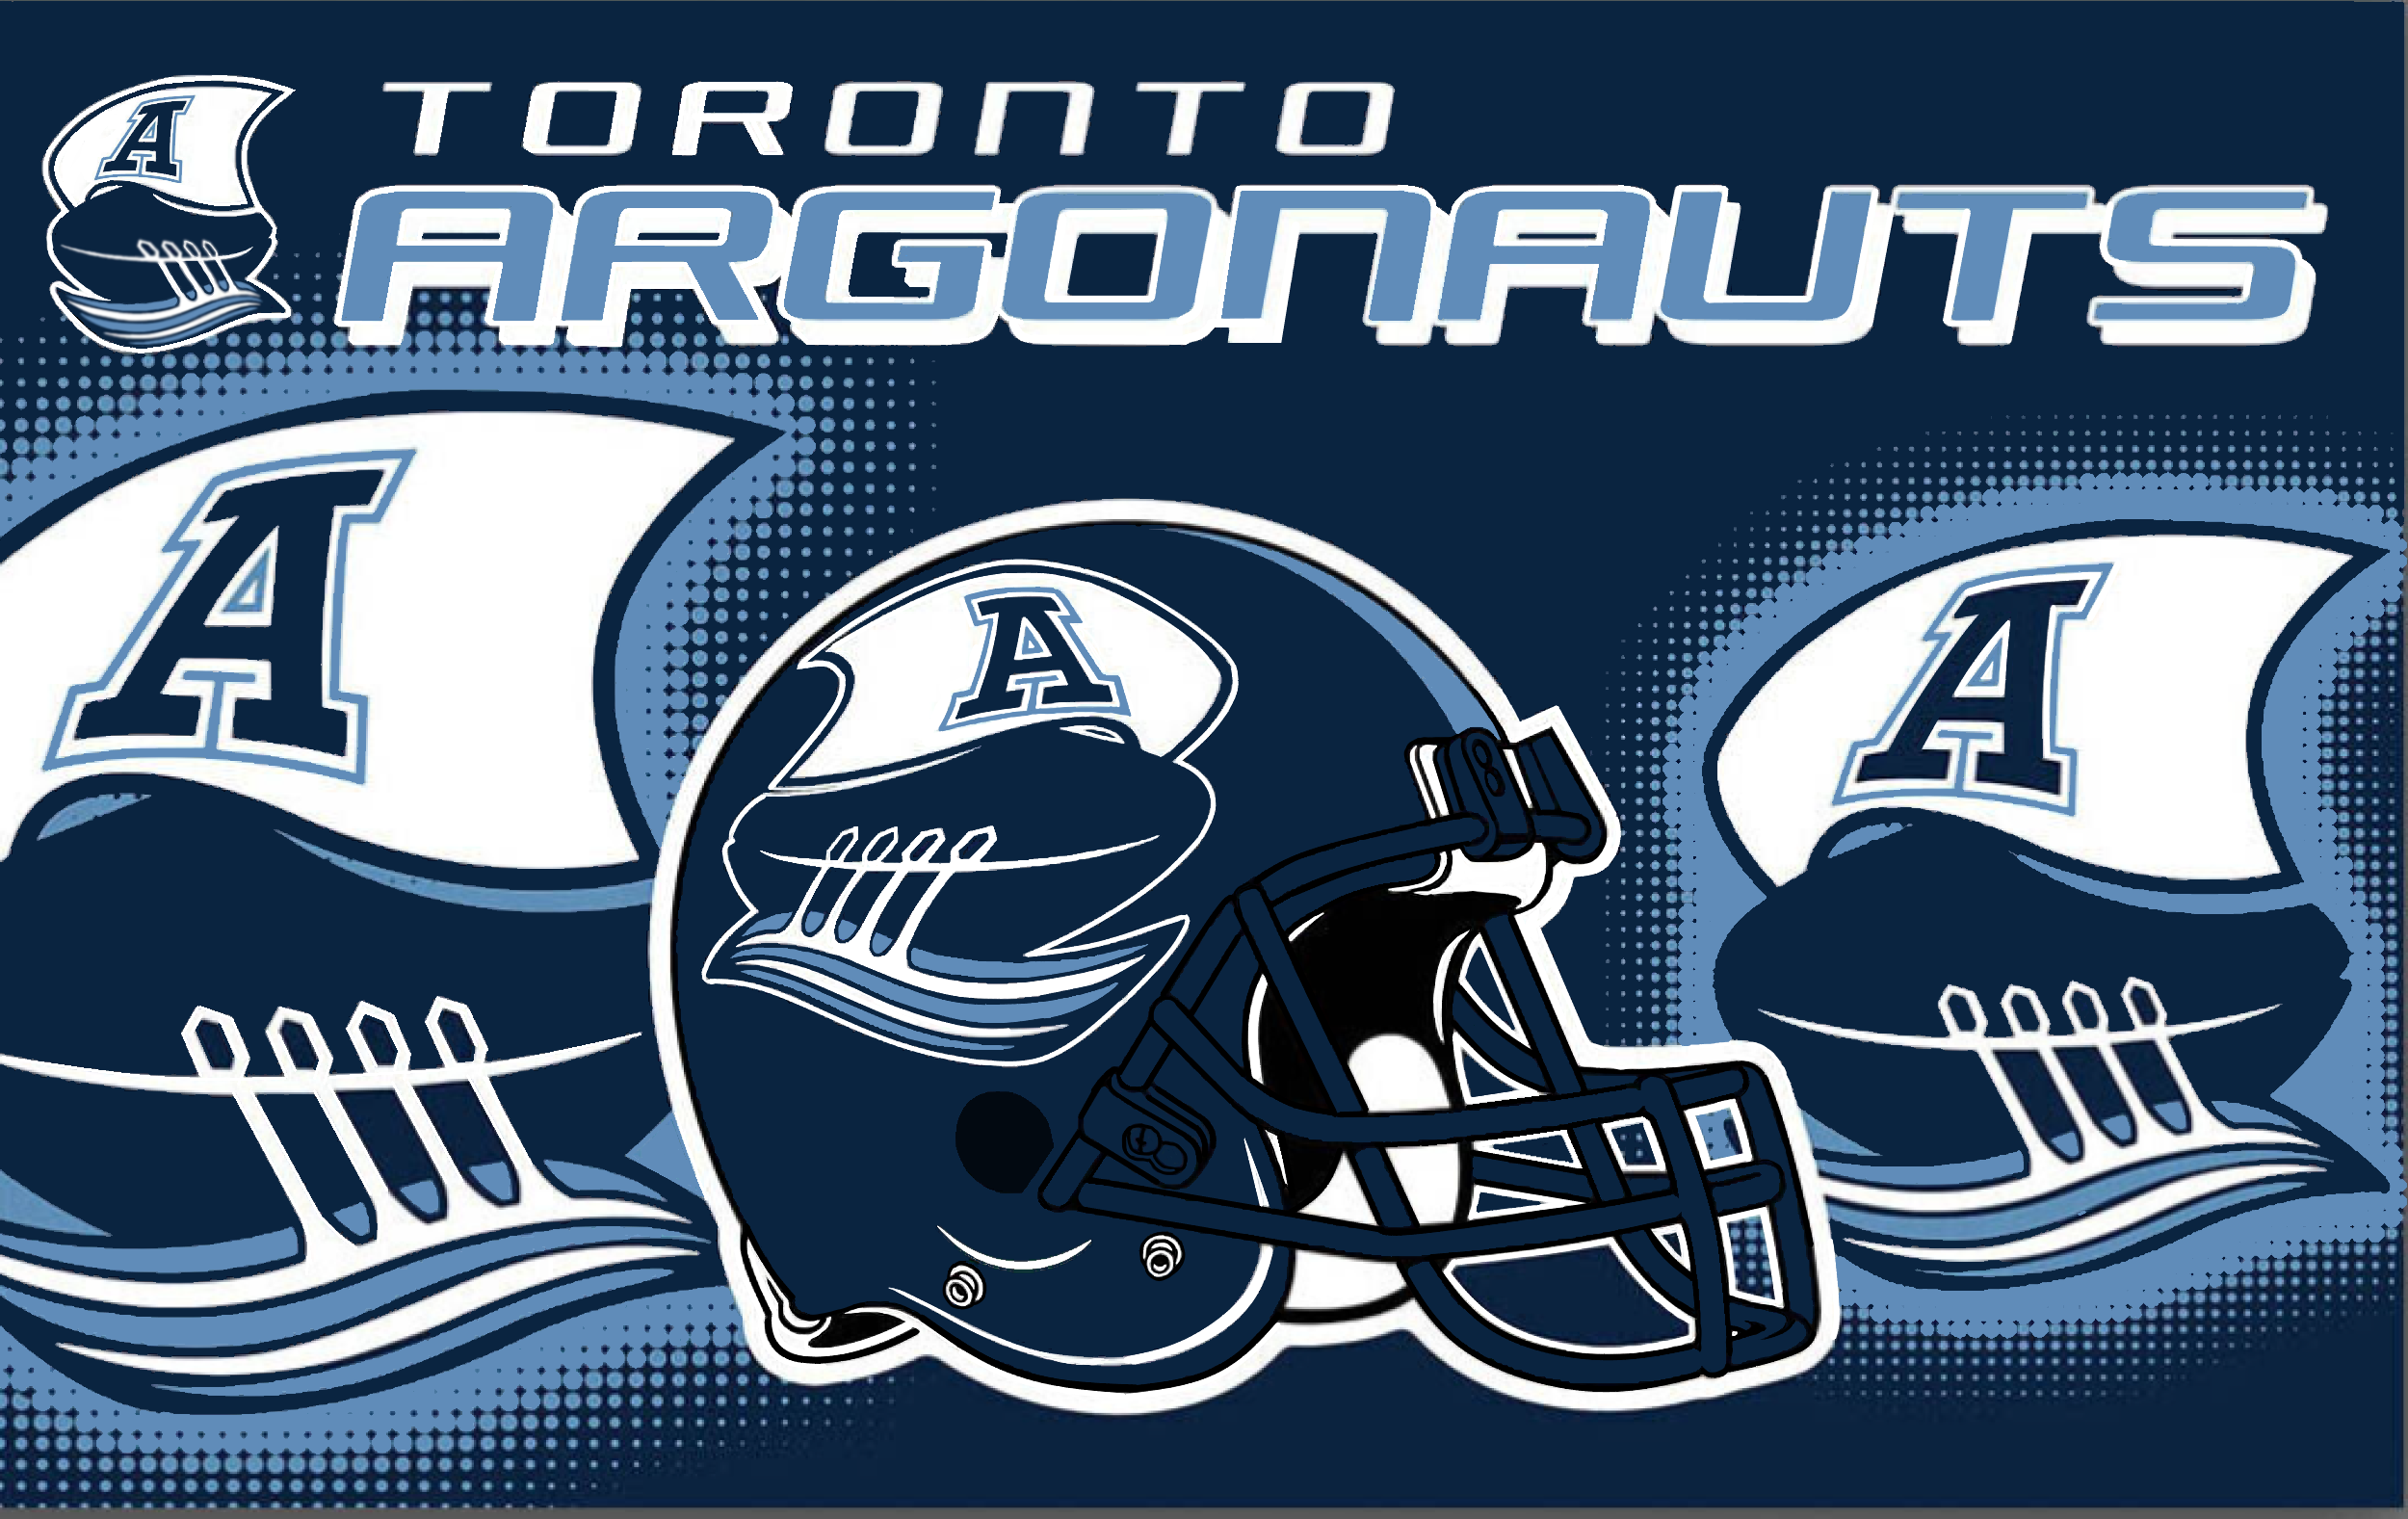 Good sport: Raghib Rocket Ismail: the Toronto Argonauts football